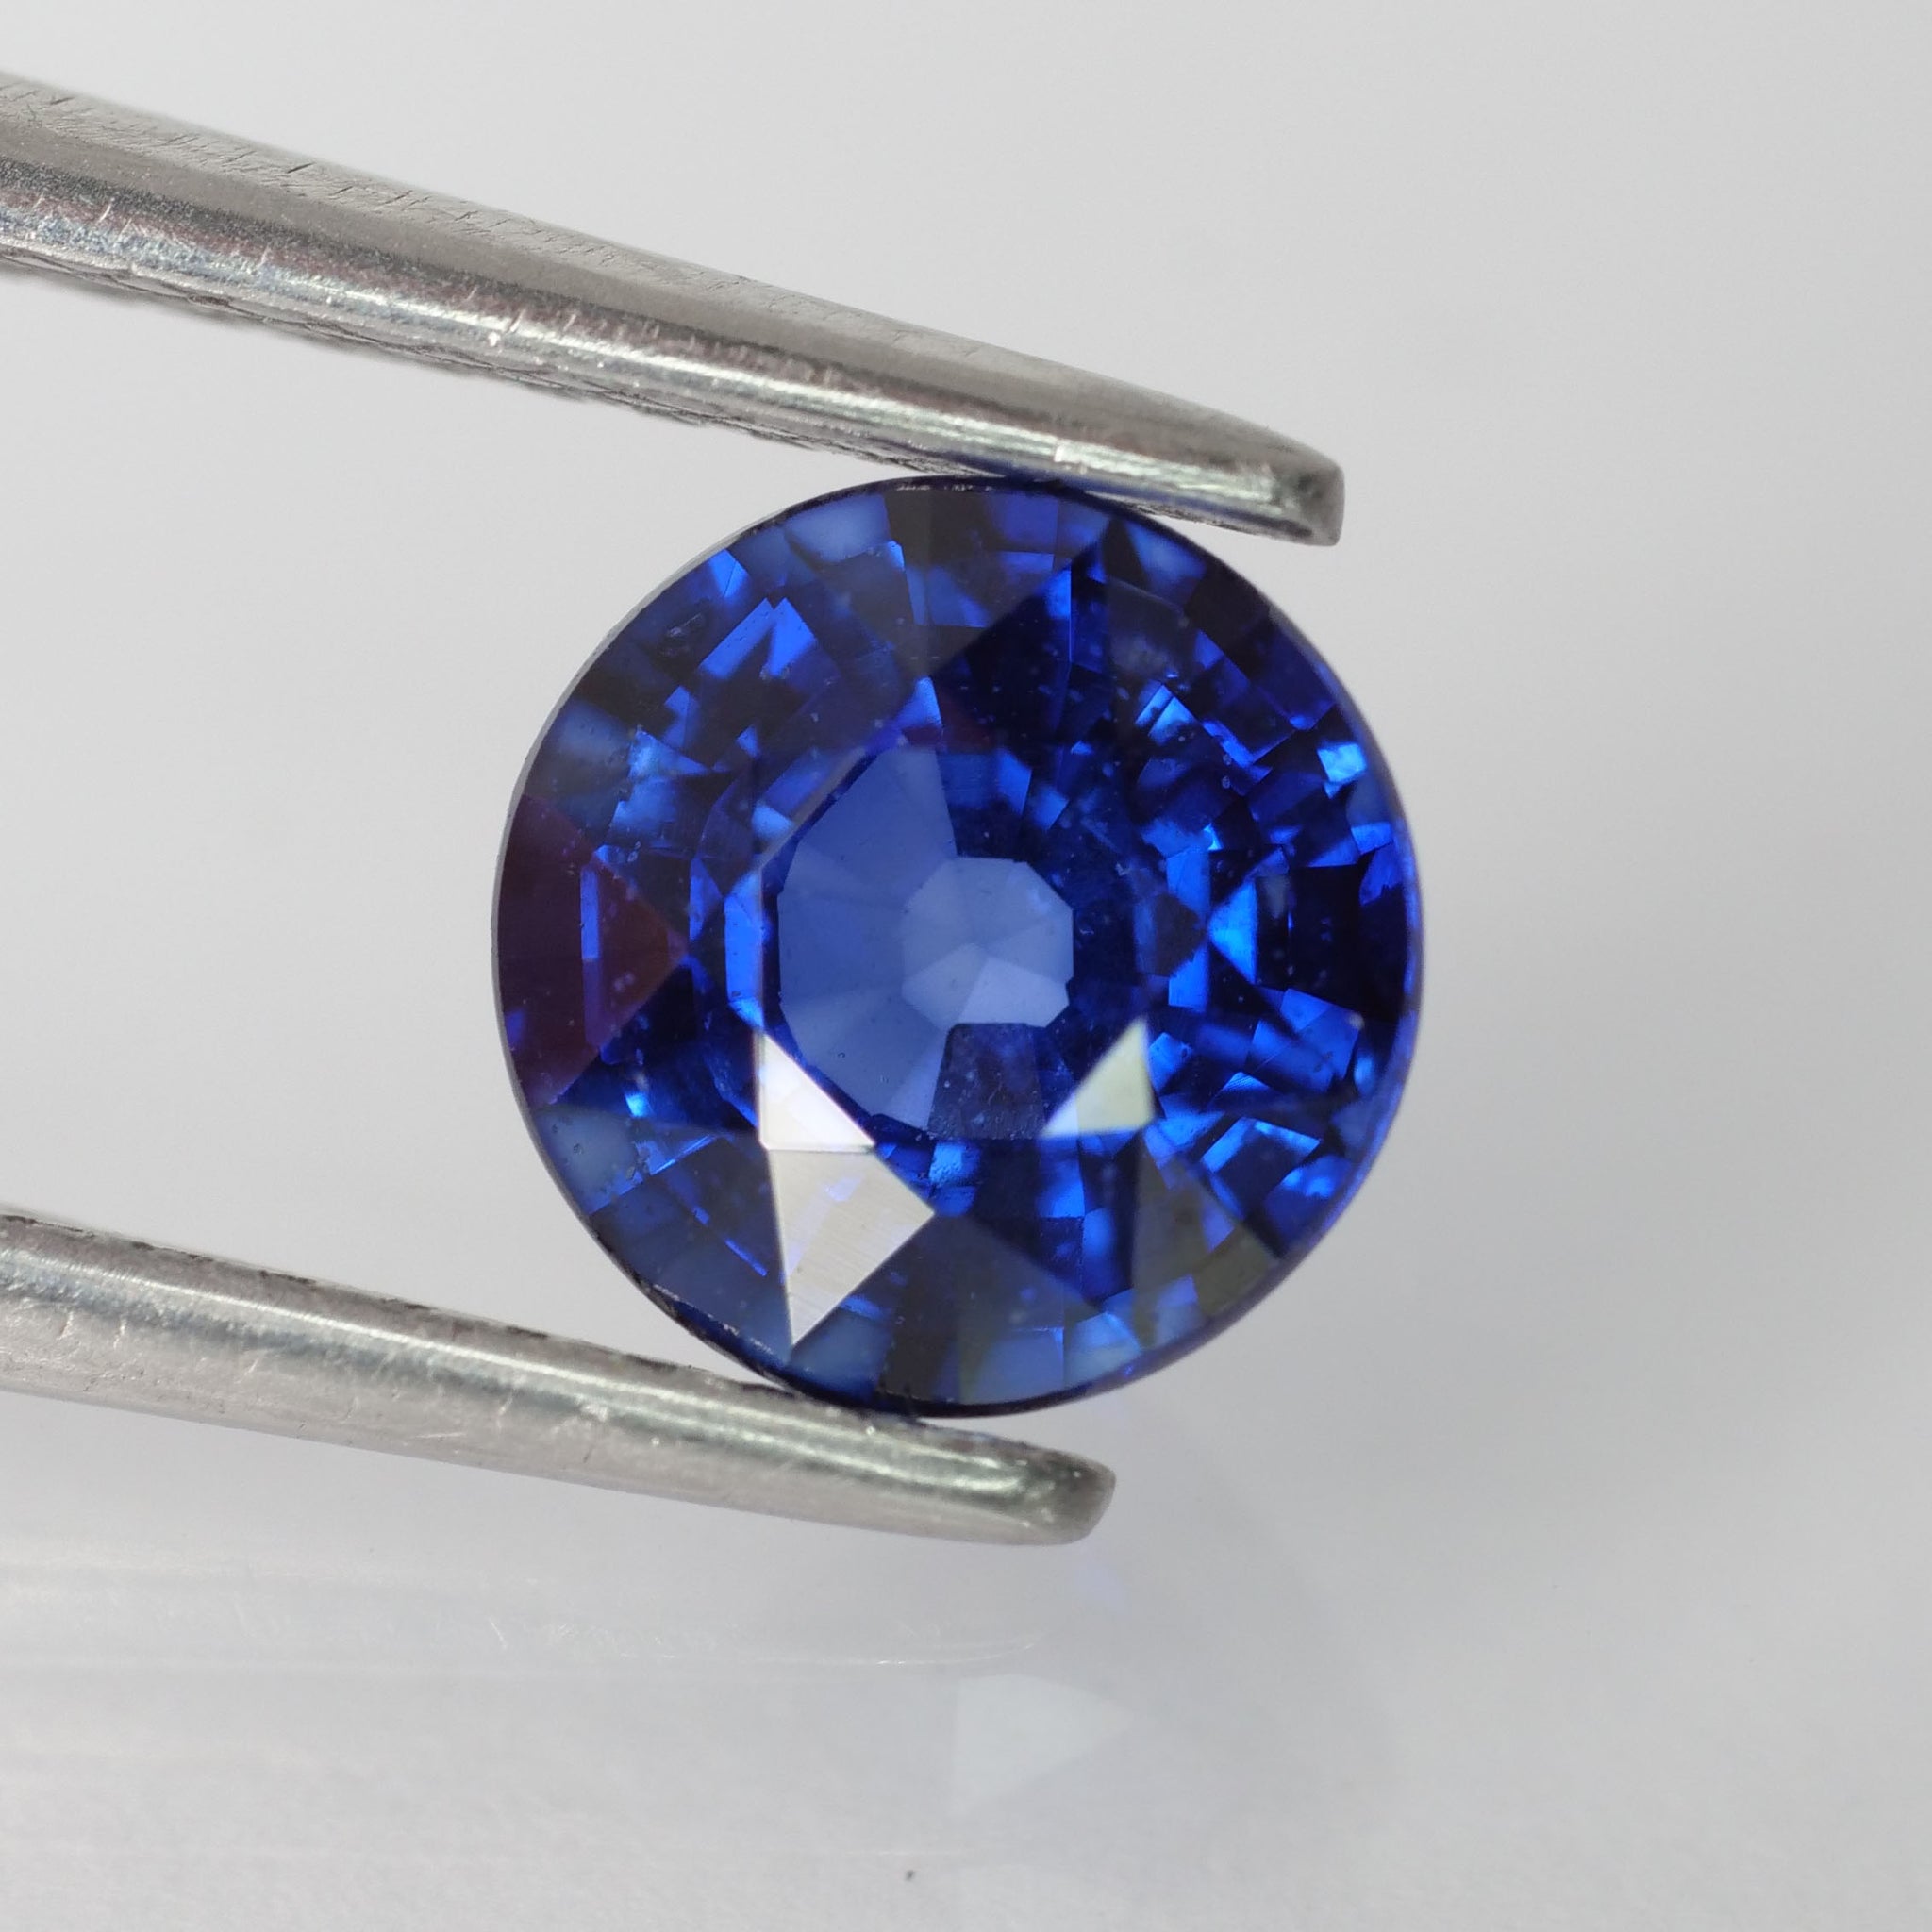 Sapphire | natural, diffusion, blue, round cut 6 mm, VS, 1 ct, Ceylon - Eden Garden Jewelry™